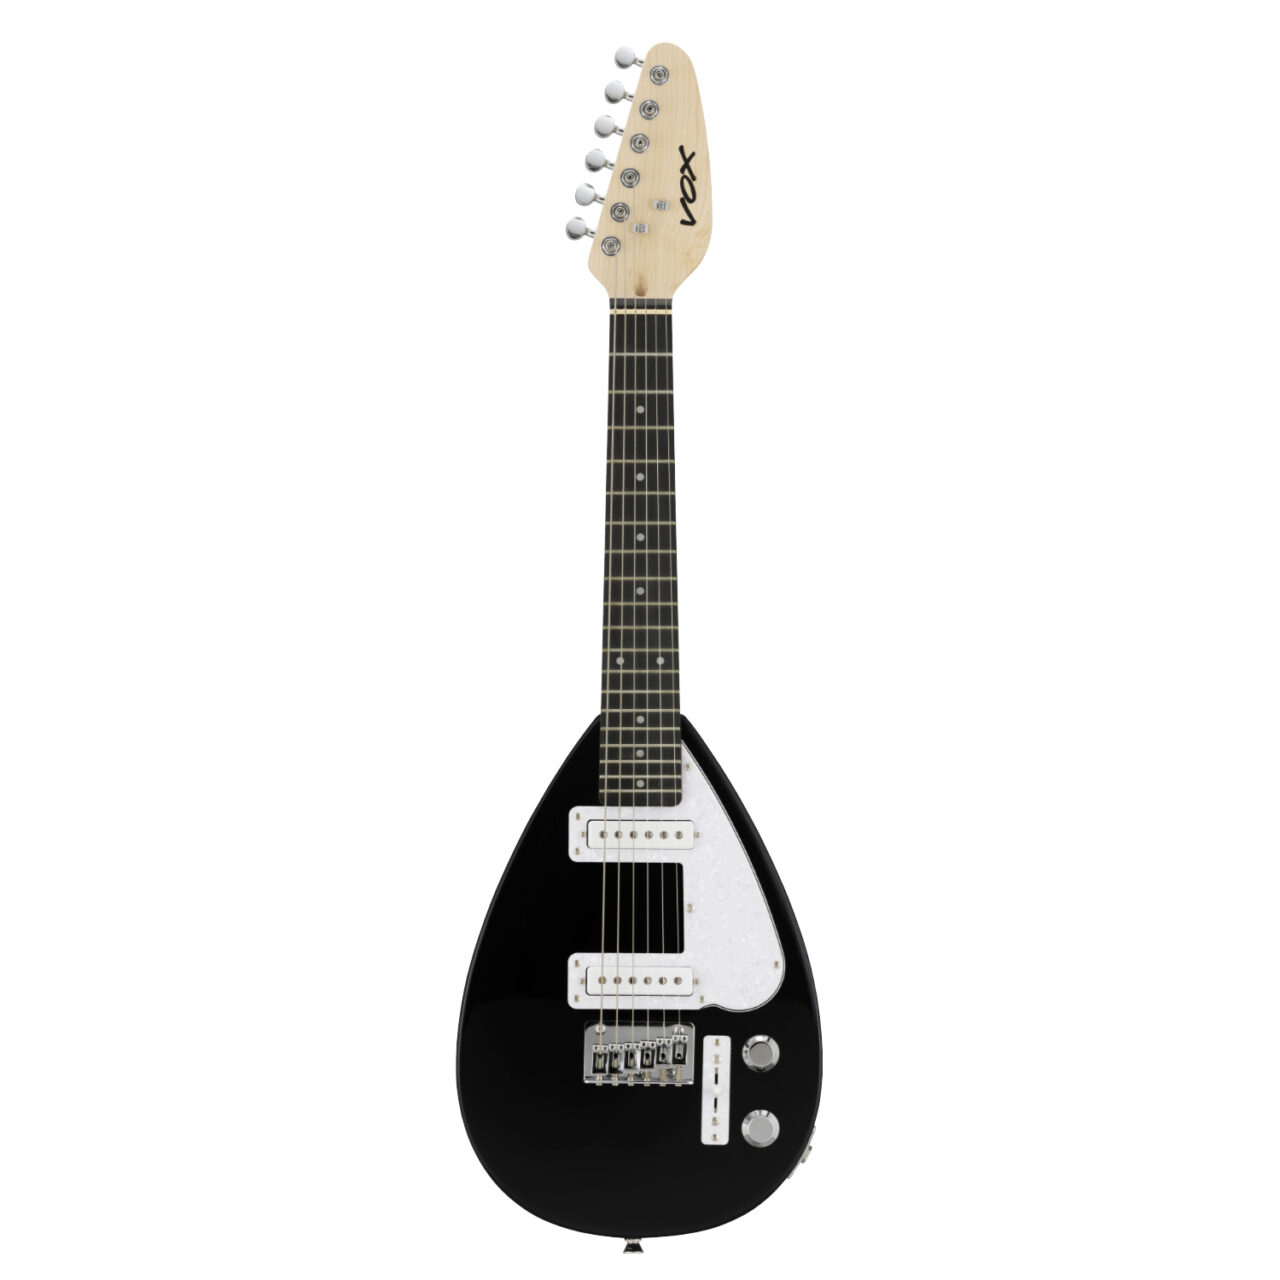 VOX MK3 MINI SLBK Solid Black ミニエレキギター ブラック